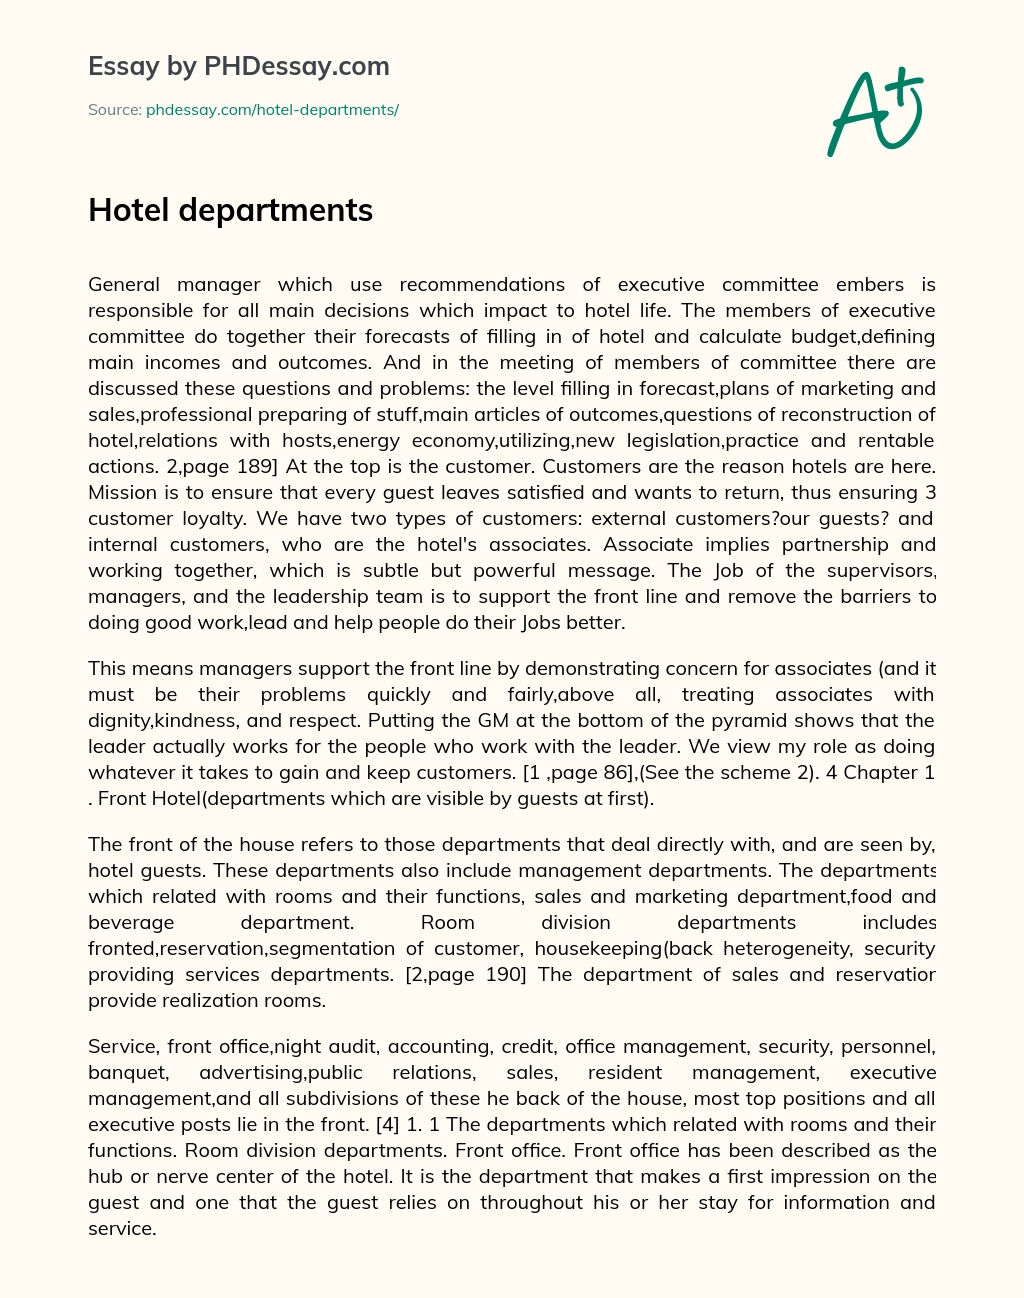 Hotel departments essay